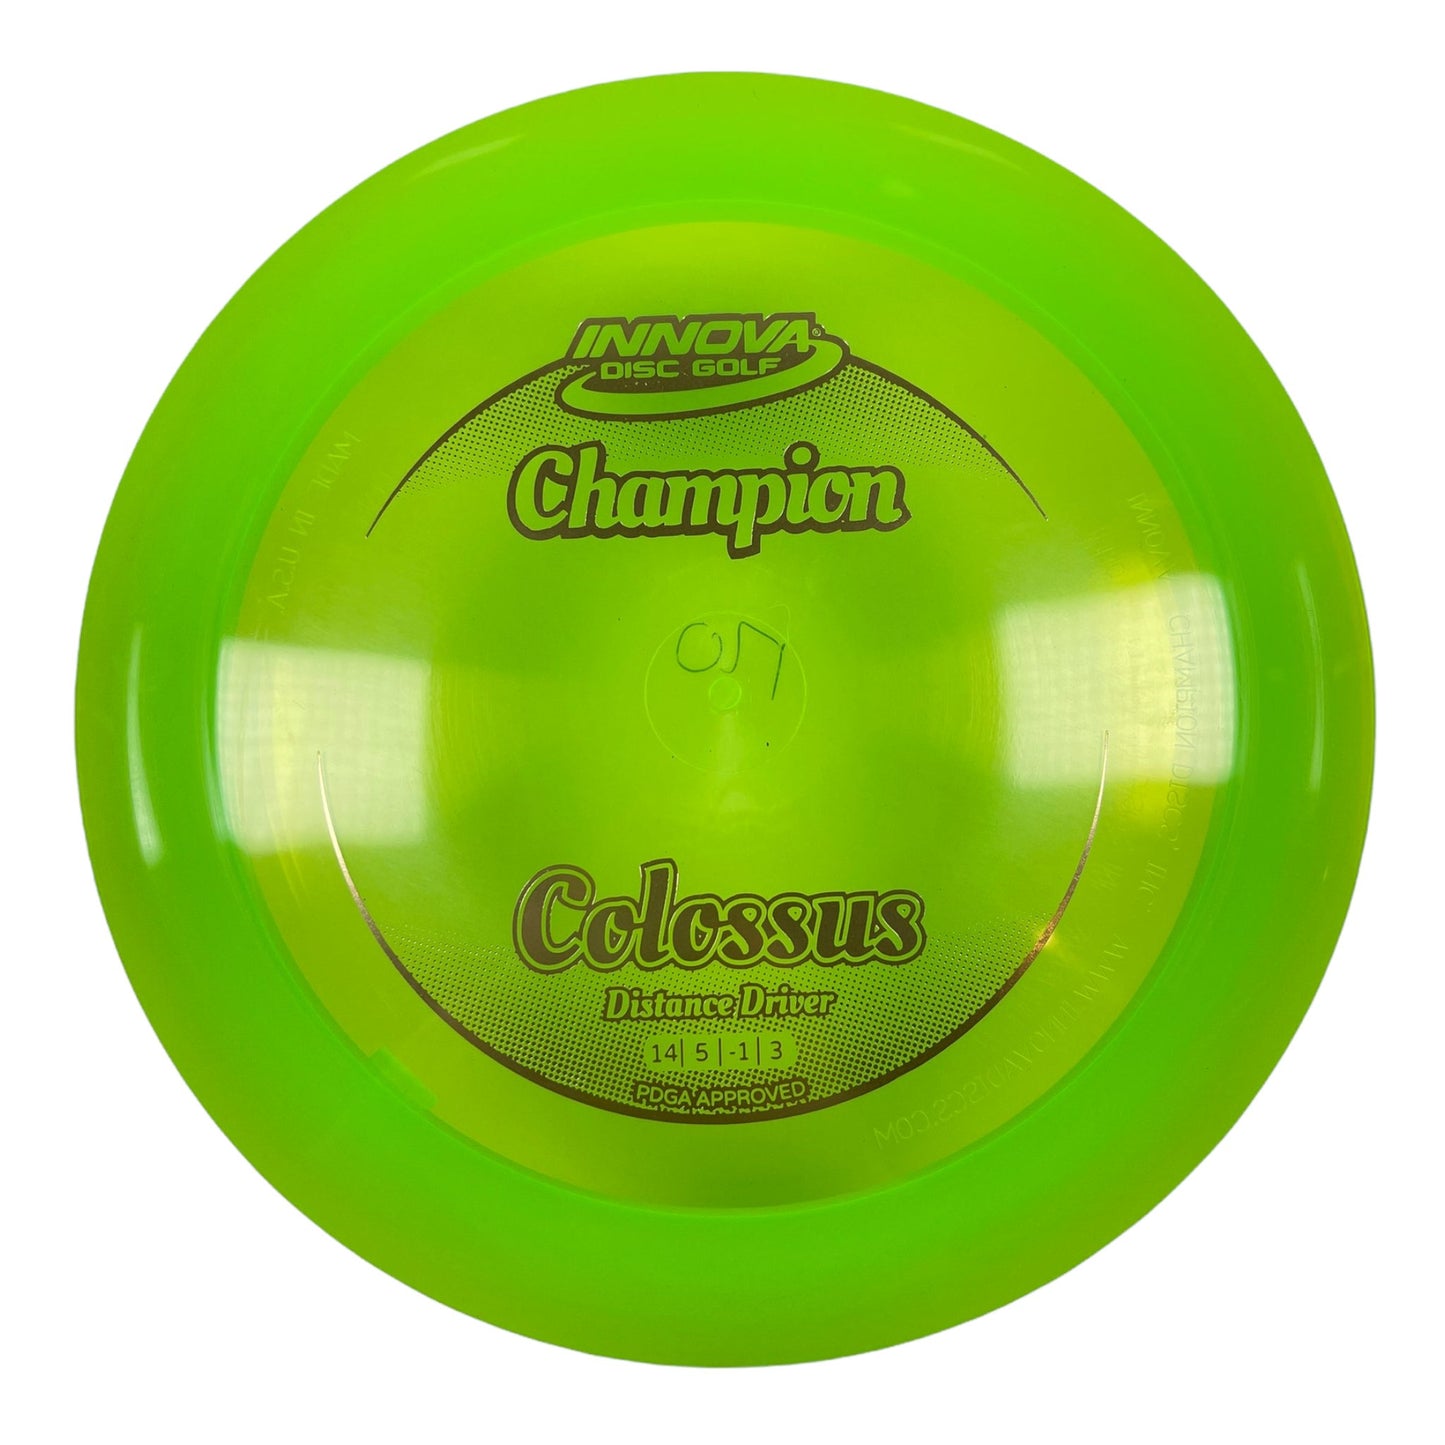 Innova Champion Discs Colossus | Champion | Green/Gold 170g Disc Golf